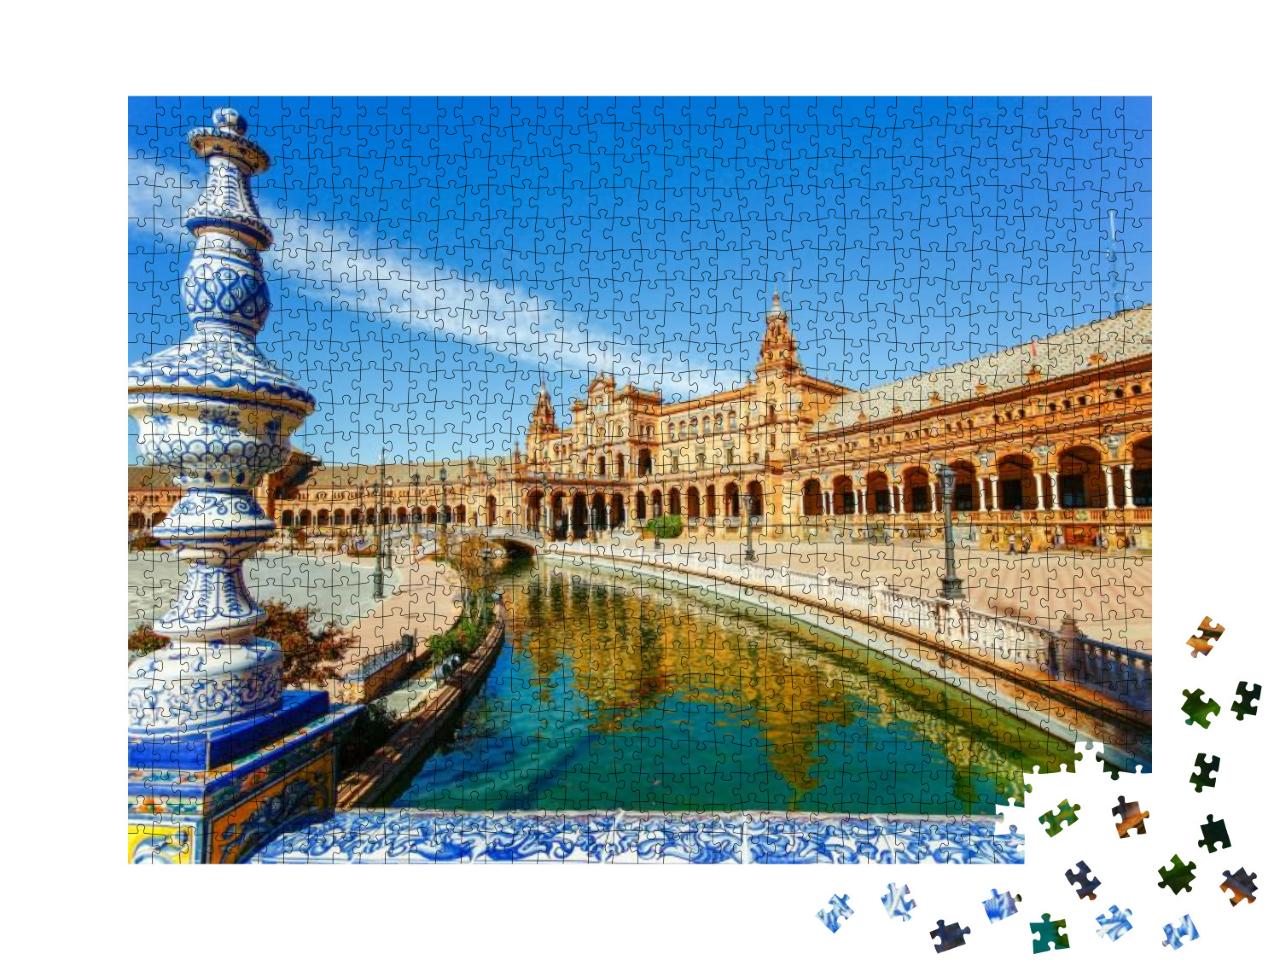 Spanish Square Plaza De Espana in Sevilla, Spain... Jigsaw Puzzle with 1000 pieces